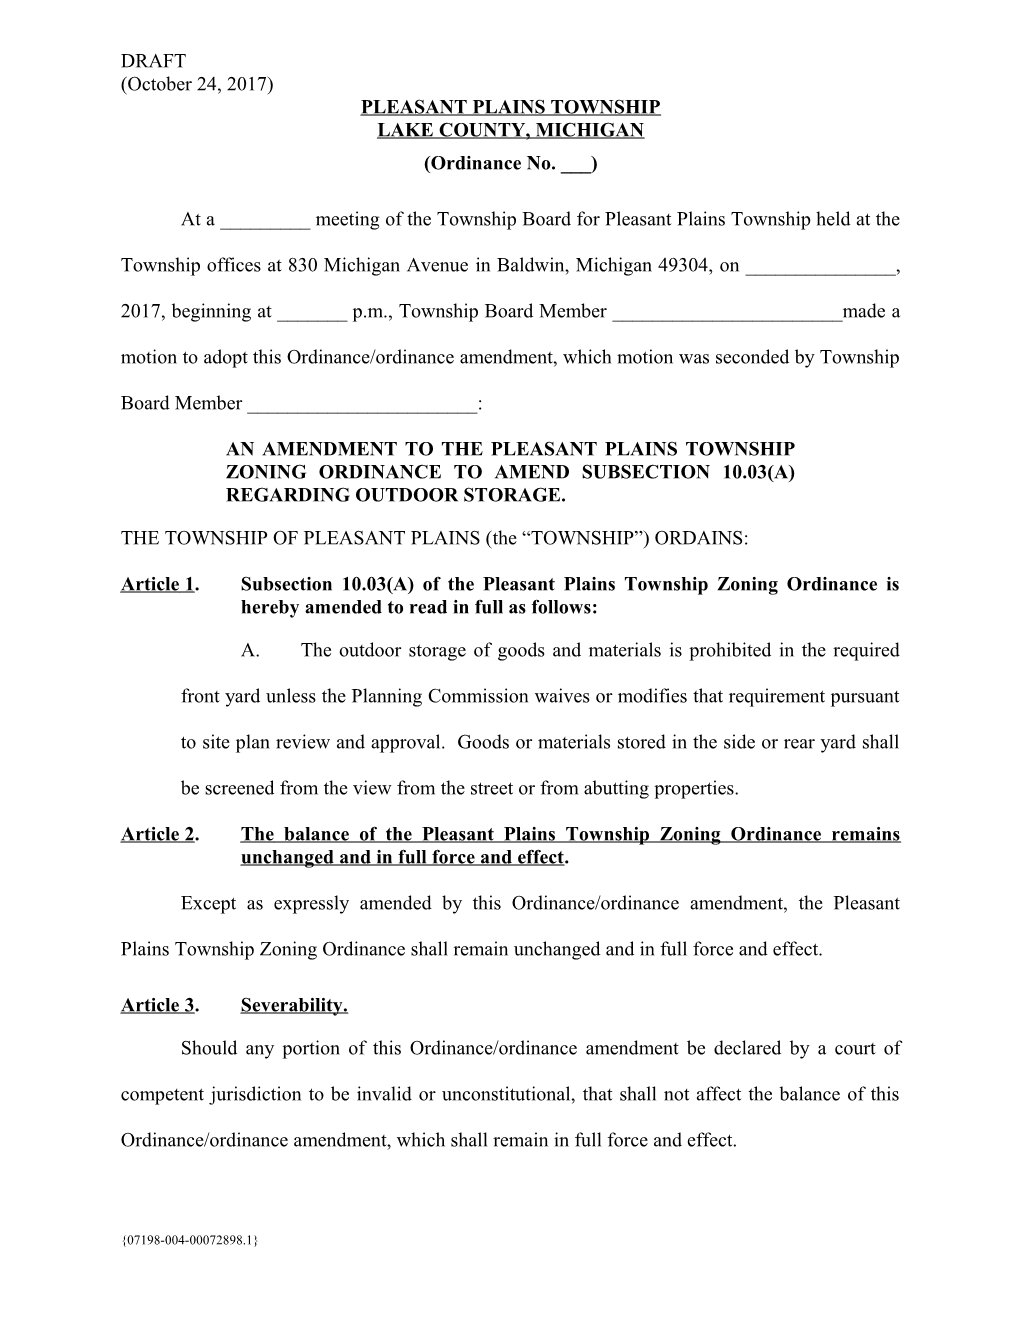 Pleasant Plains Twp; Ordinance Amendment (00051151;1)